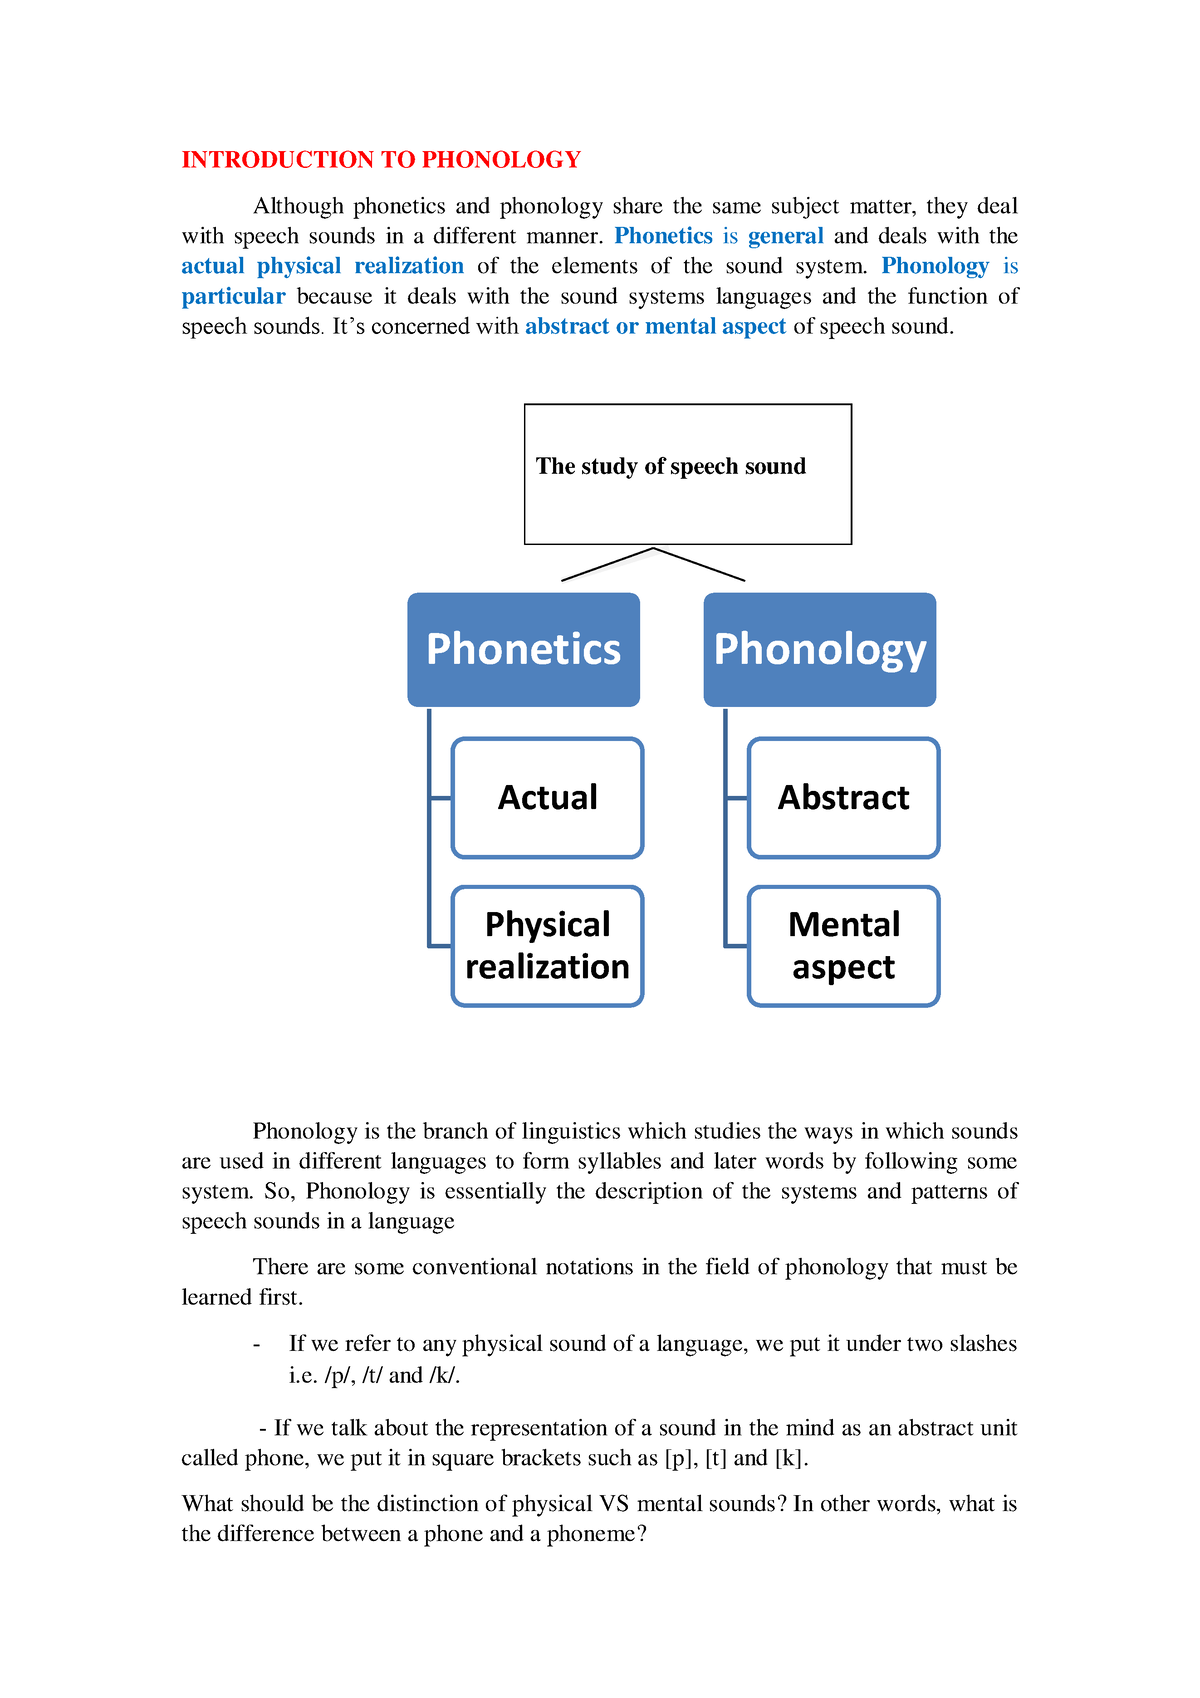 dissertations on phonology